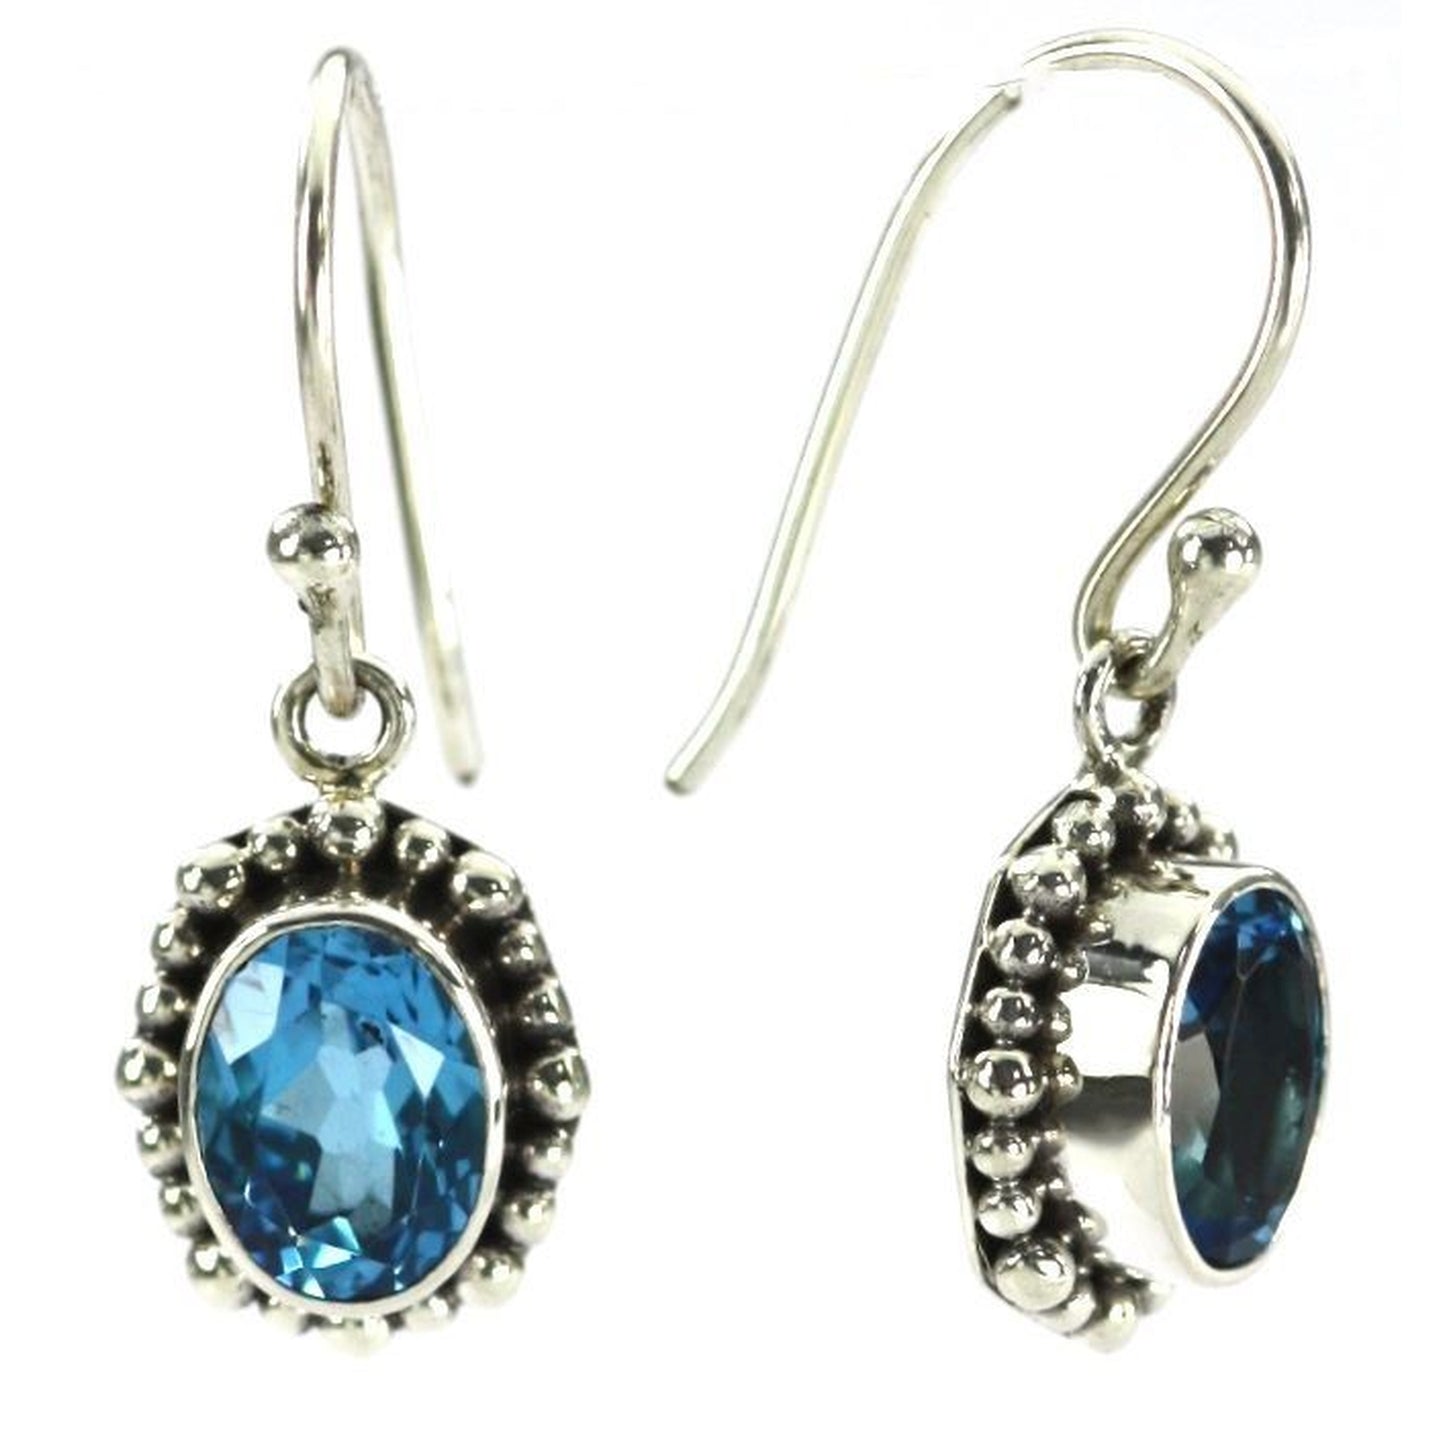 Silver earrings with oval blue topaz gemstones.